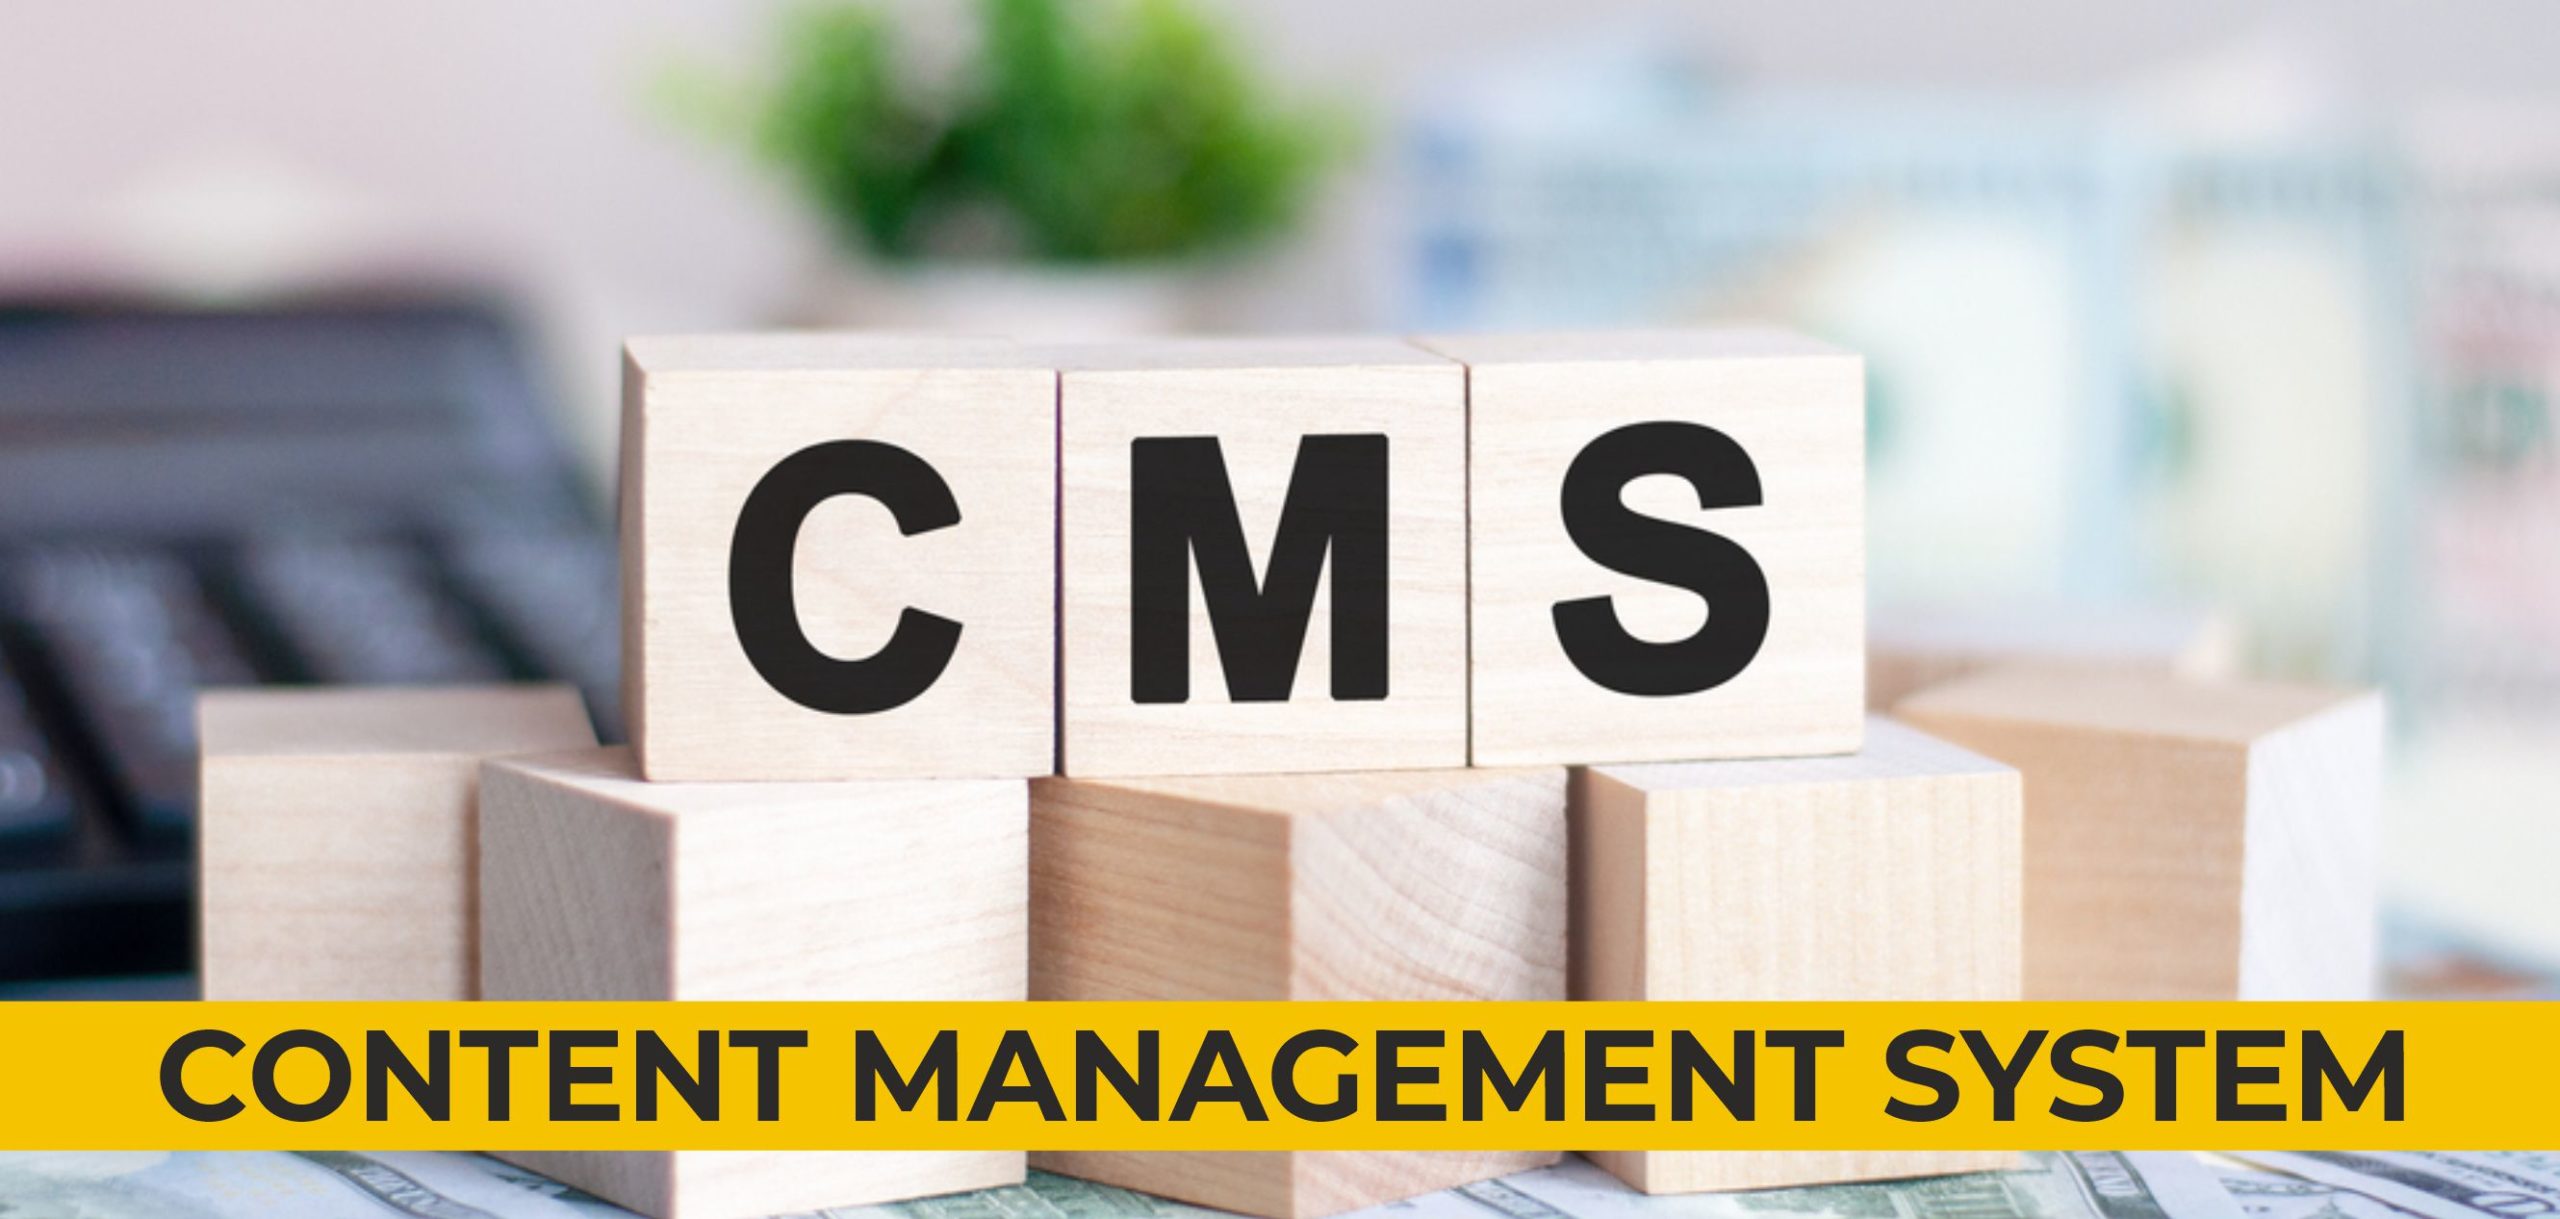 Cosmic - Content Management System